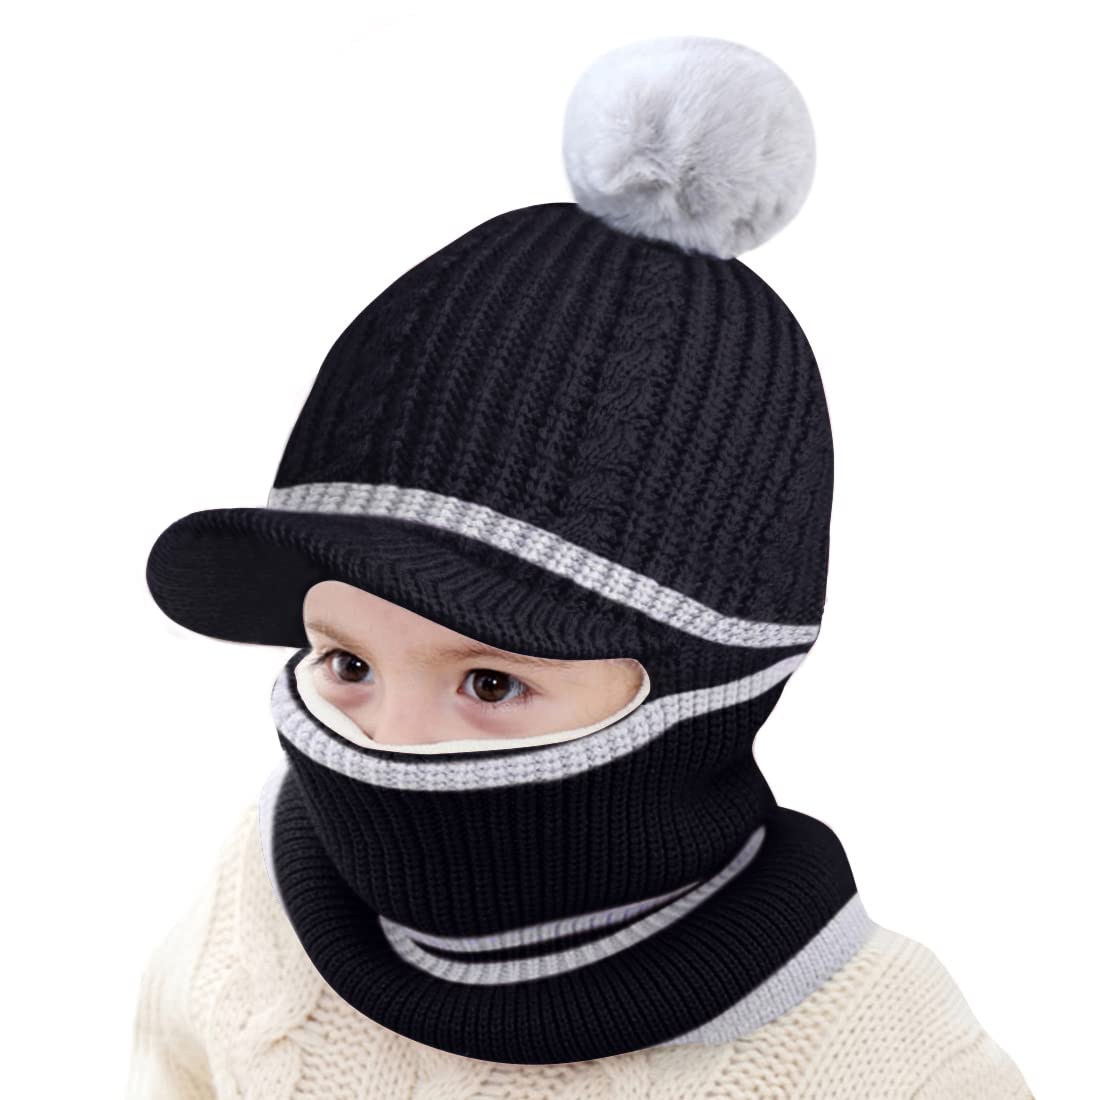 Bonvince Toddler Winter Hat, Baby Winter Hat, Fleece Lined Girls Boys Winter Hat, Kids Winter Hat Scarf Earflap Hood Skull Caps, 1-5T (66